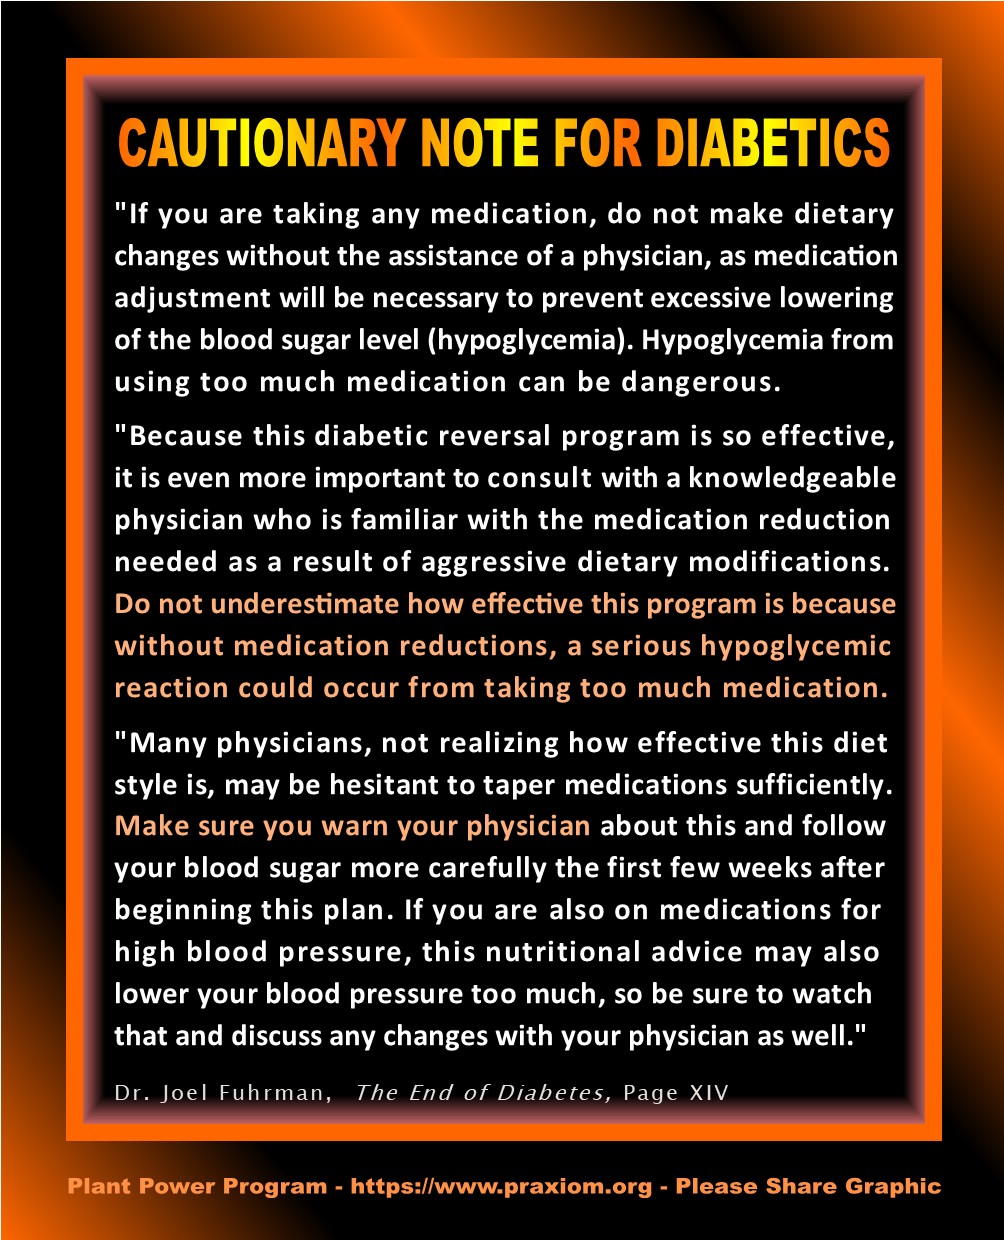 Cautionary Note for Diabetics - Dr. Joel Fuhrman